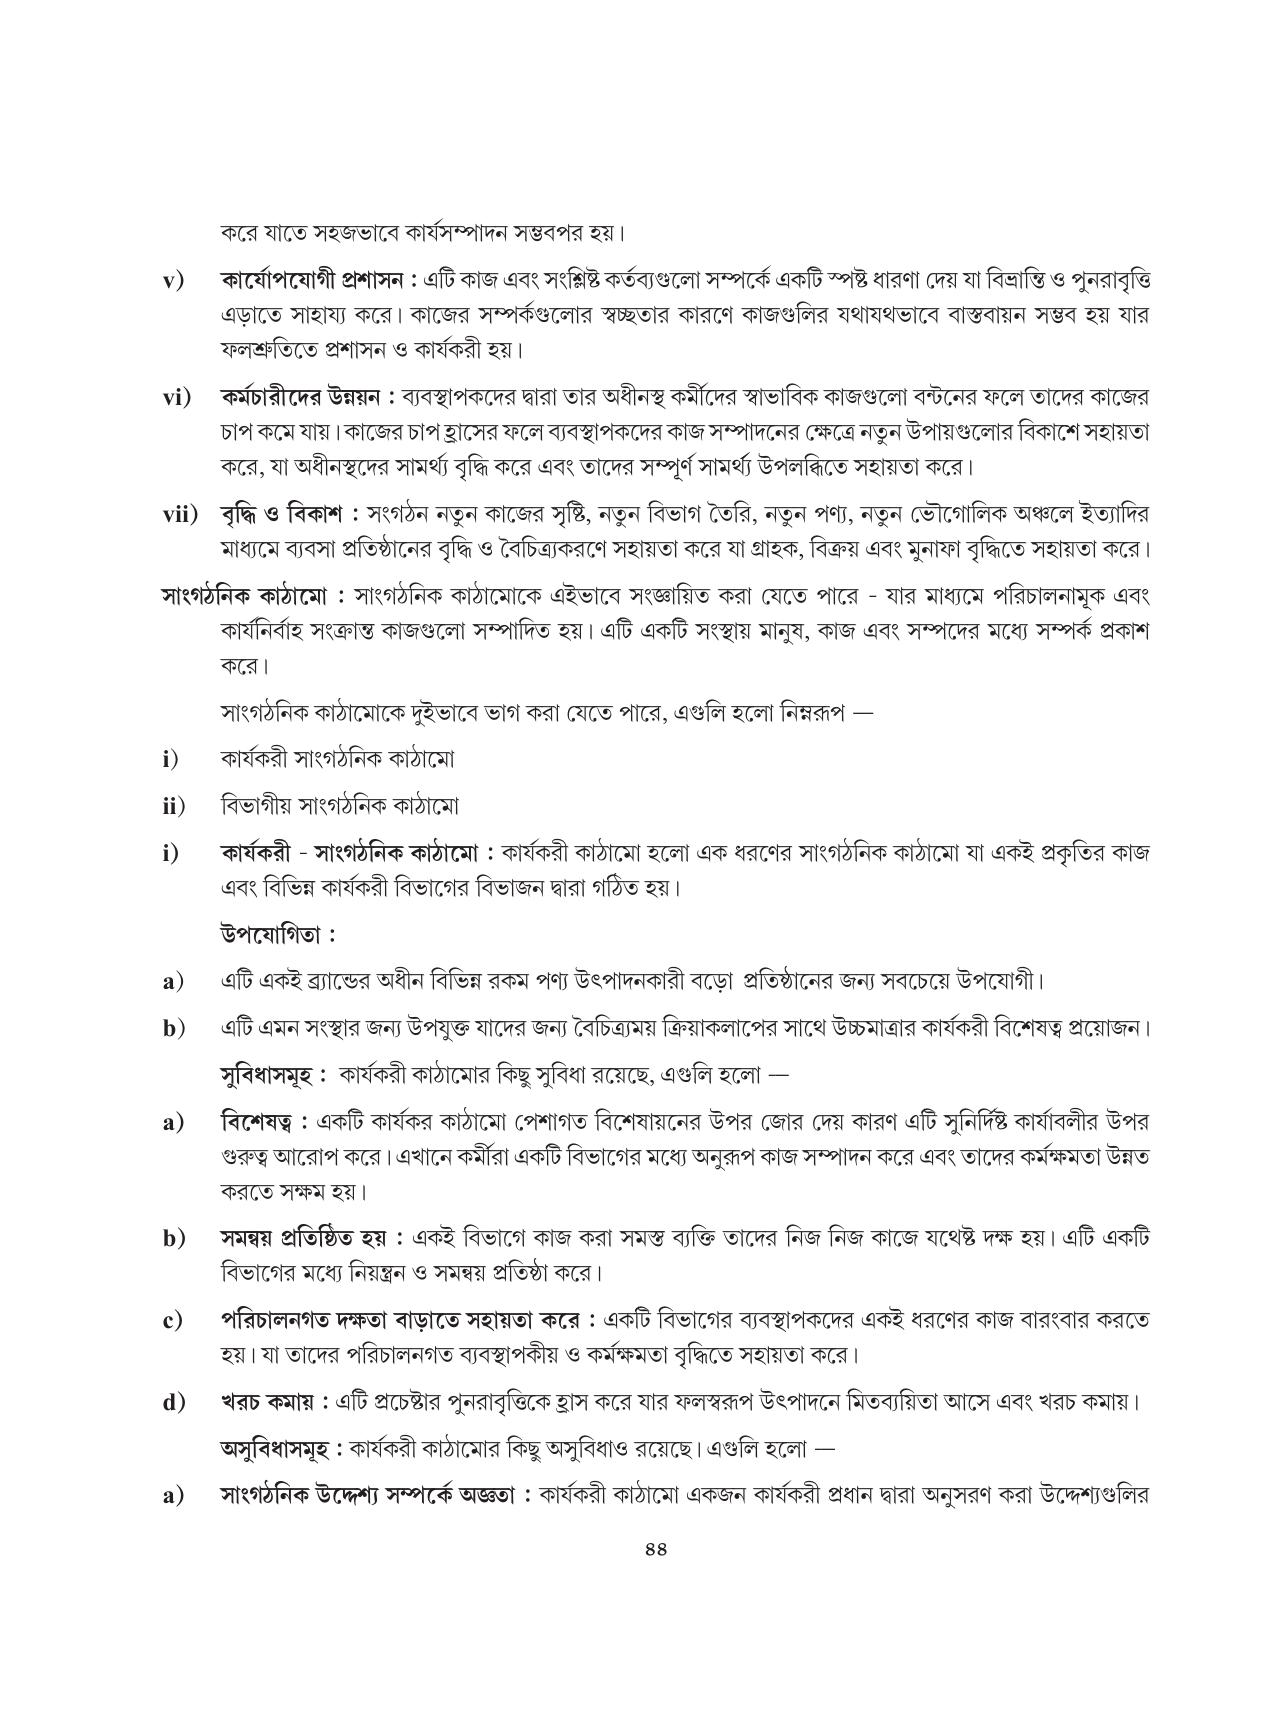 Tripura Board Class 12 Karbari Shastra Bengali Version Workbooks - Page 44